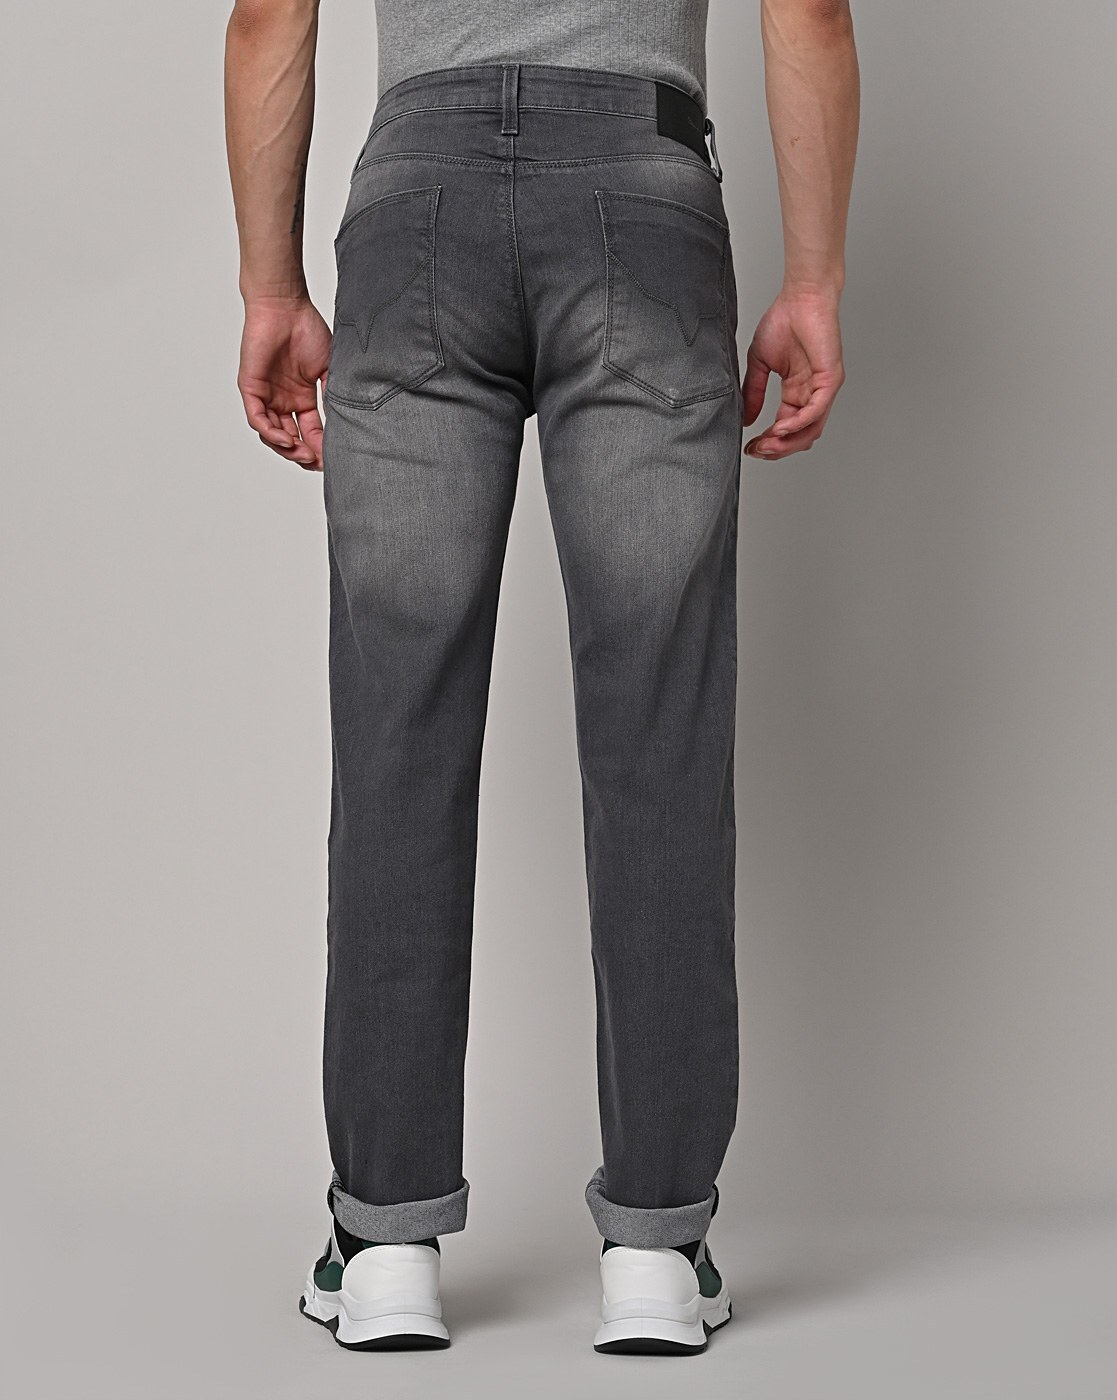 Buy Pepe Jeans Men Charcoal Grey & White Colourblocked Shaper